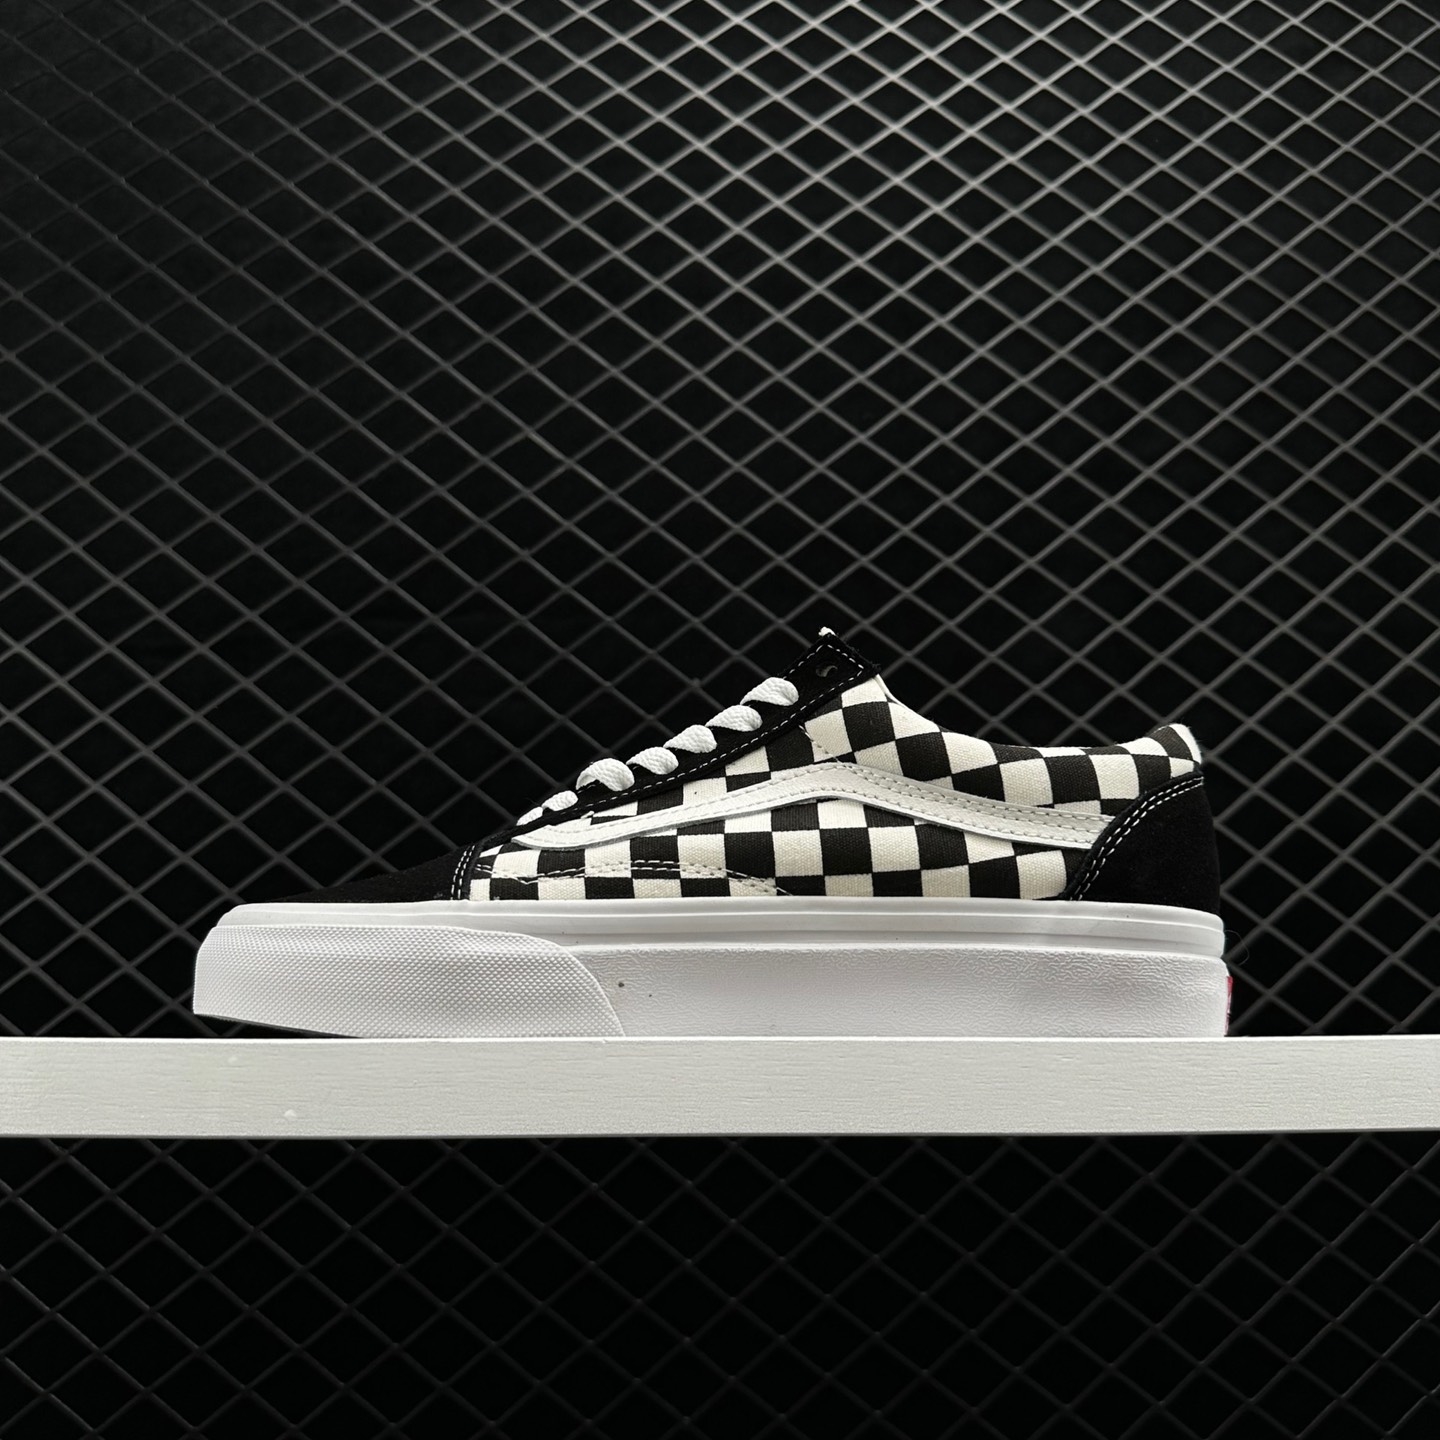 Vans OG Old Skool LX 'Checkerboard - Black' Sneakers - Limited Edition